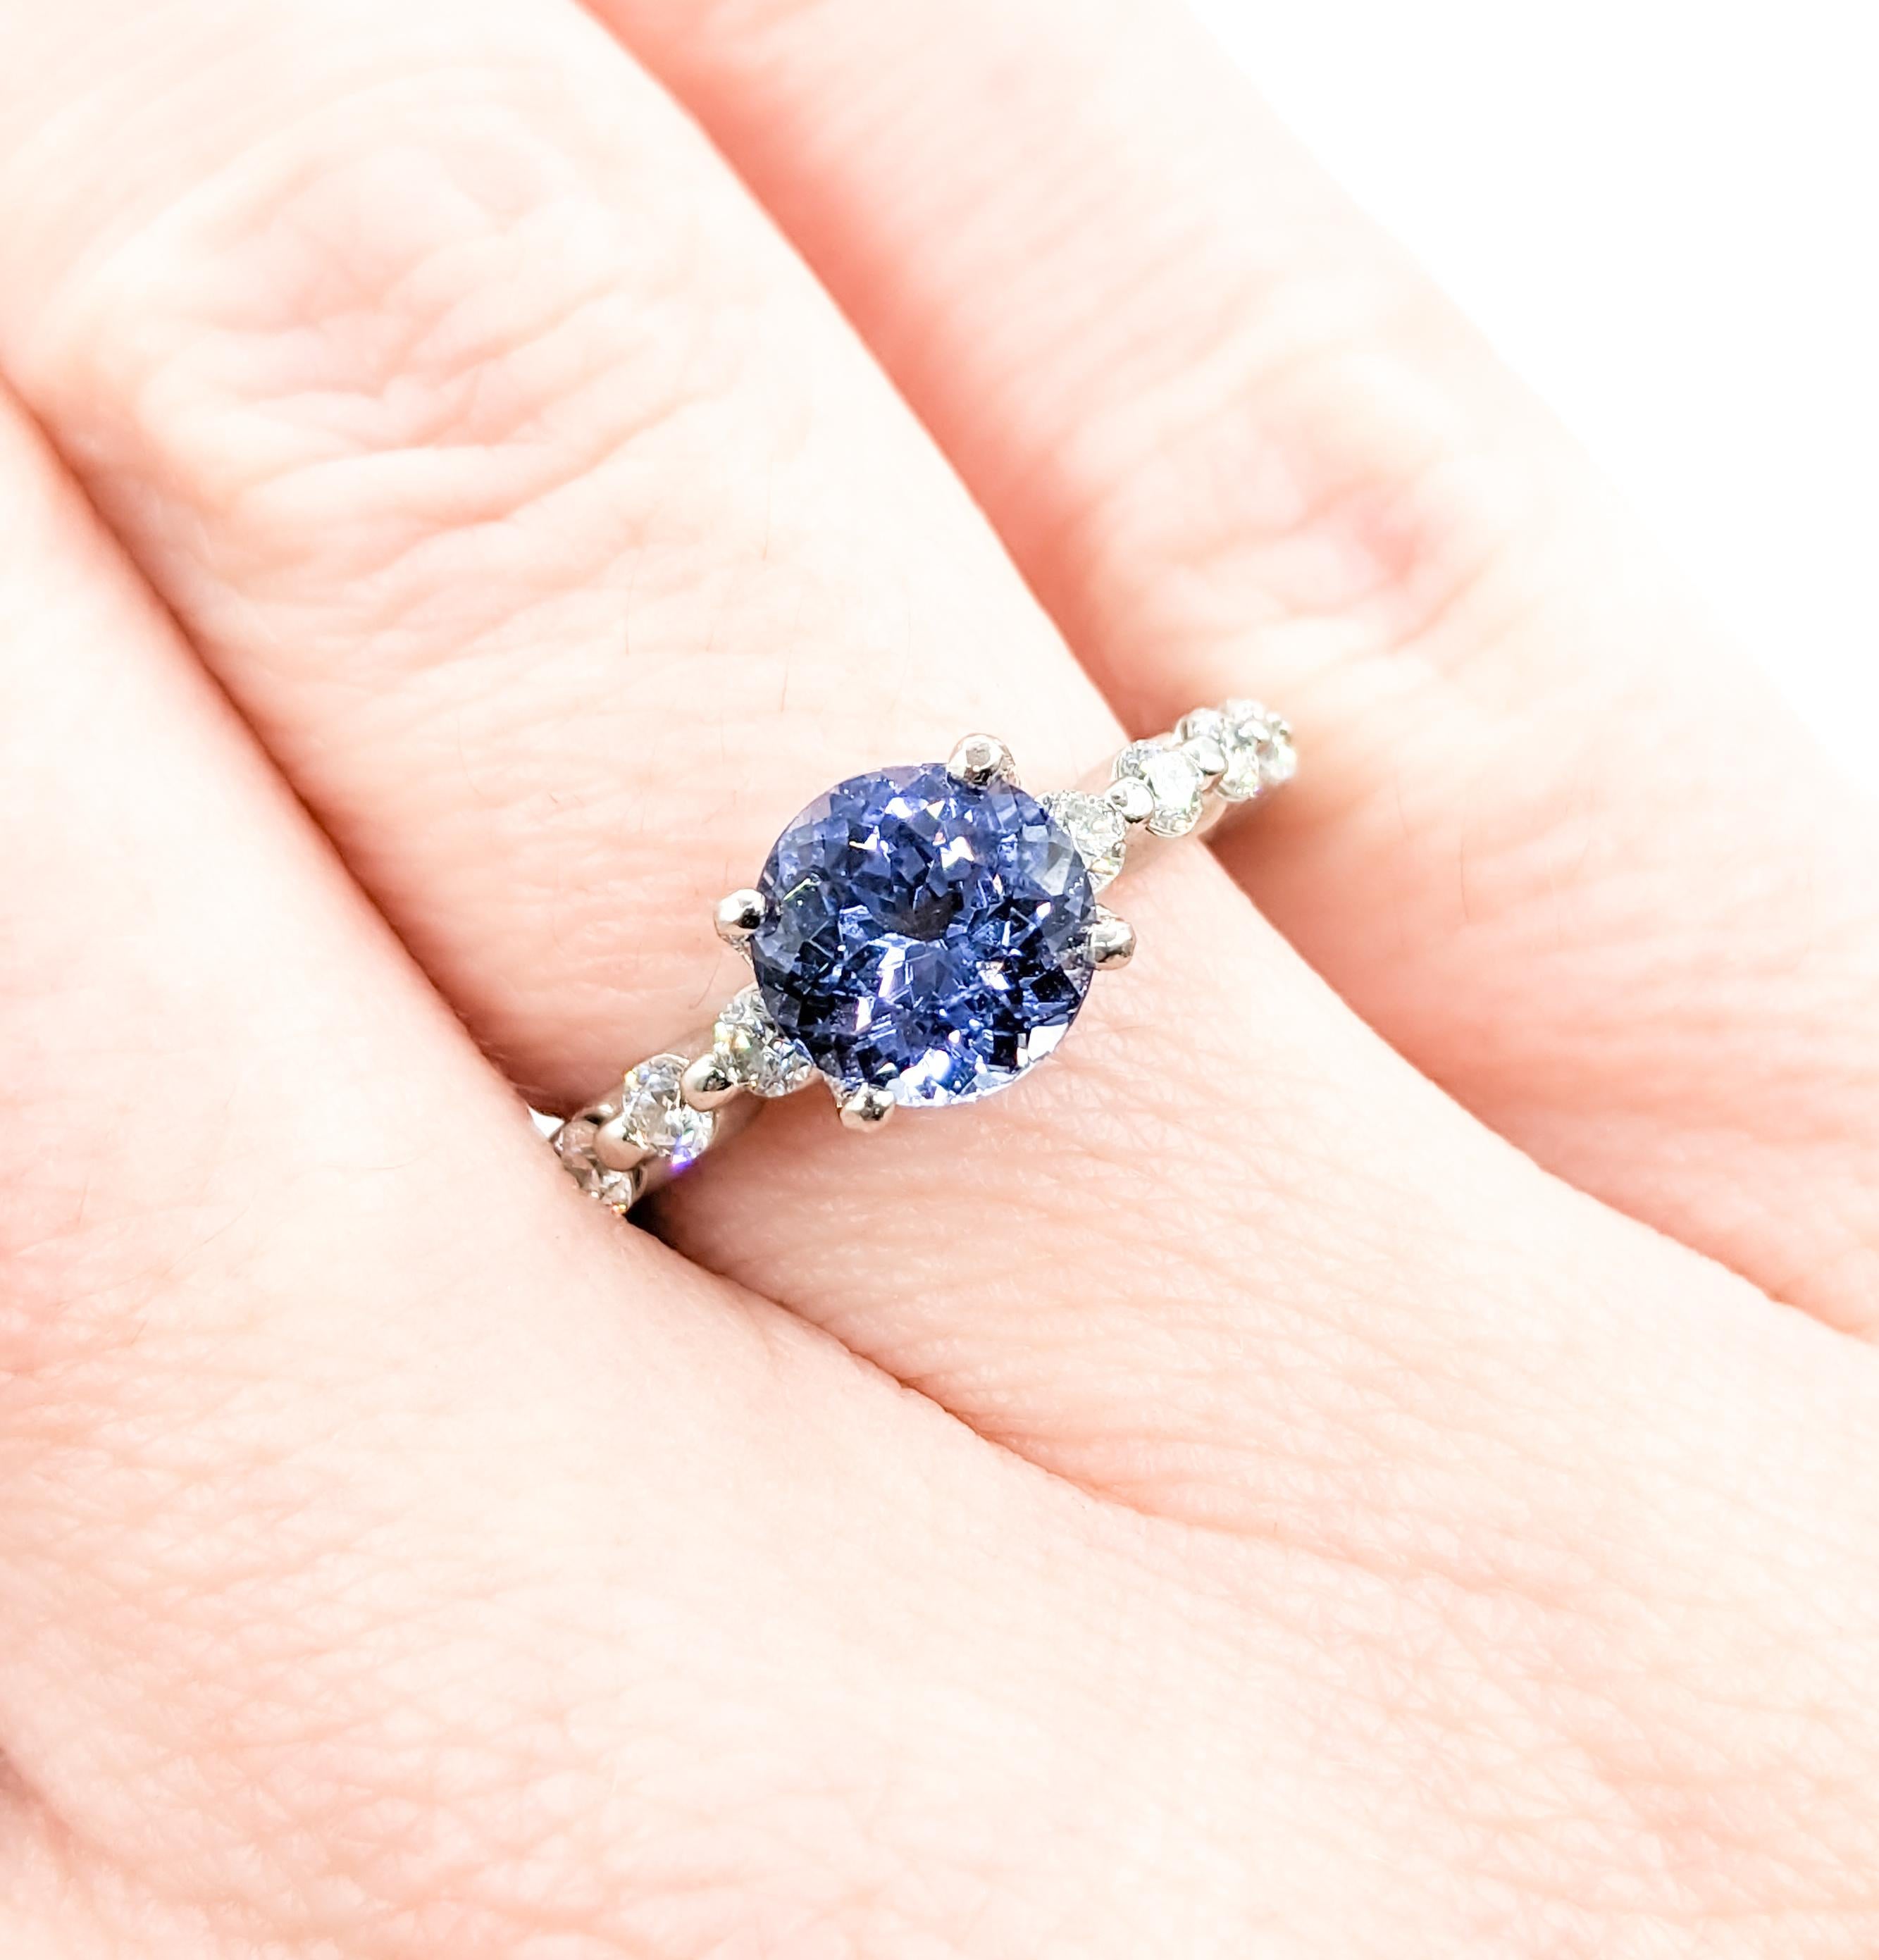 1.9ct Blue Sapphire &.50ctw Diamond Ritani Ring In Premium Platinum



Introducing our exquisite Ritani Ring, masterfully crafted in premium platinum, featuring .50ctw of round diamonds that glisten with VS2 clarity and F-G color. This stunning ring